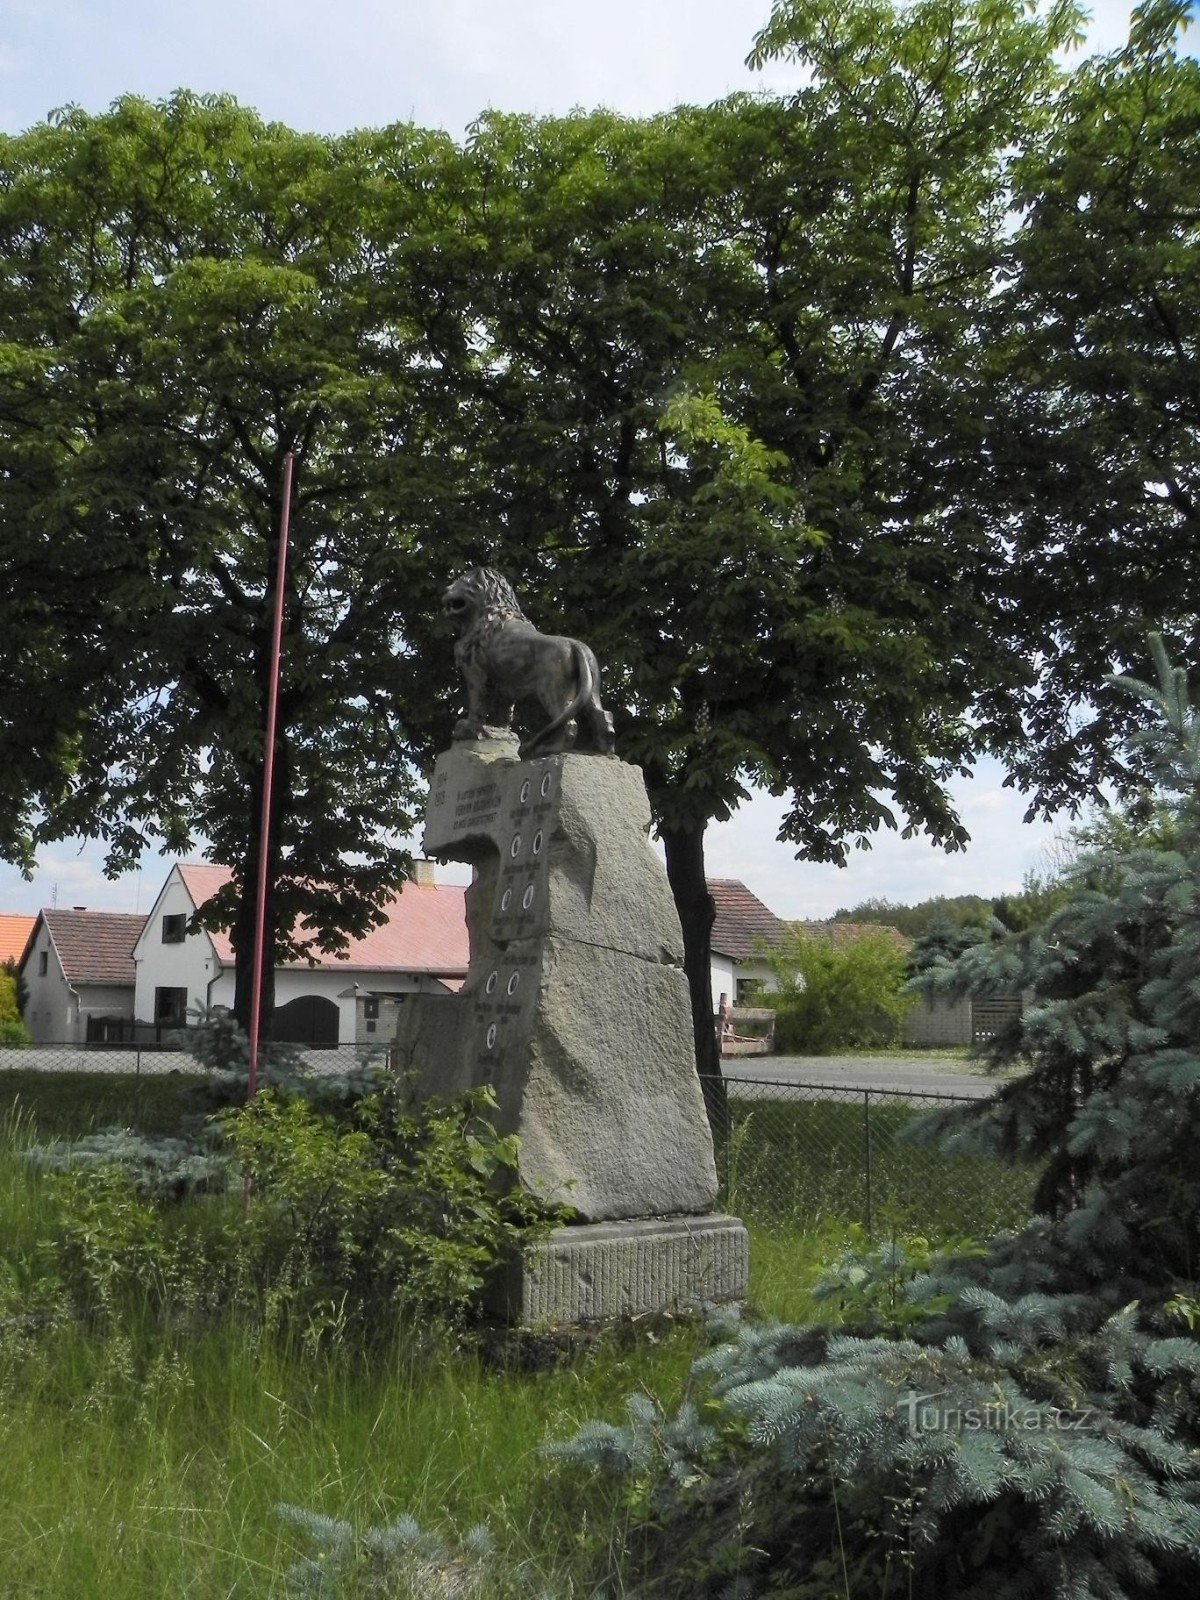 Zdemyslice, monument to the fallen